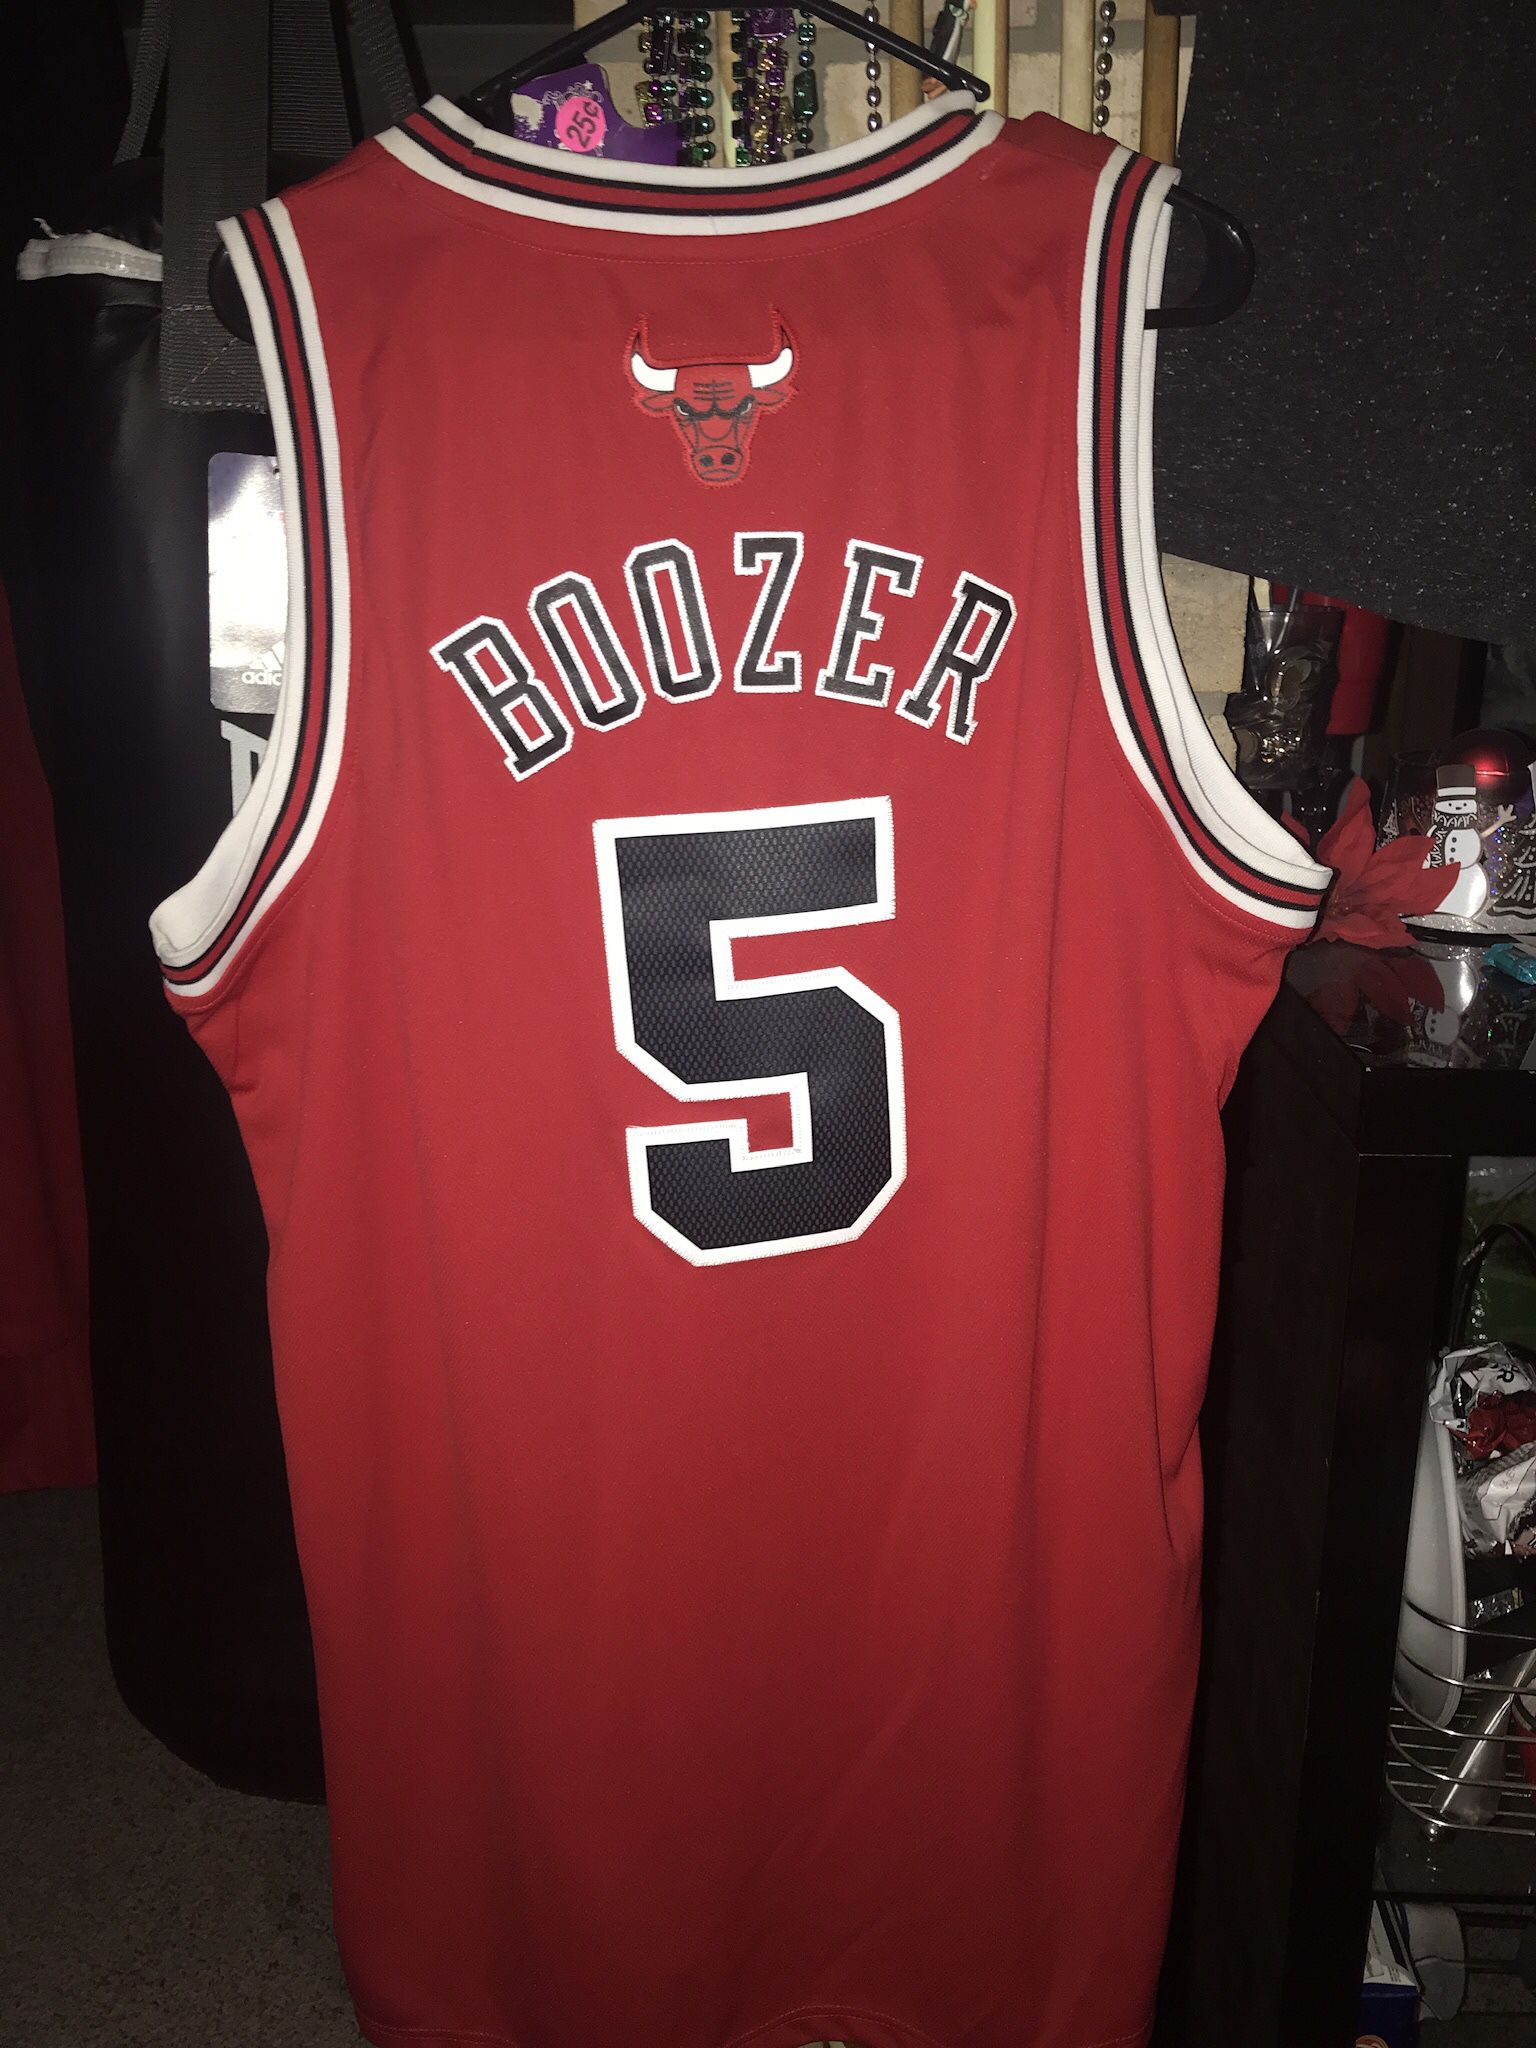 #5 Boozer Chicago Bulls Adidas Jersey $100